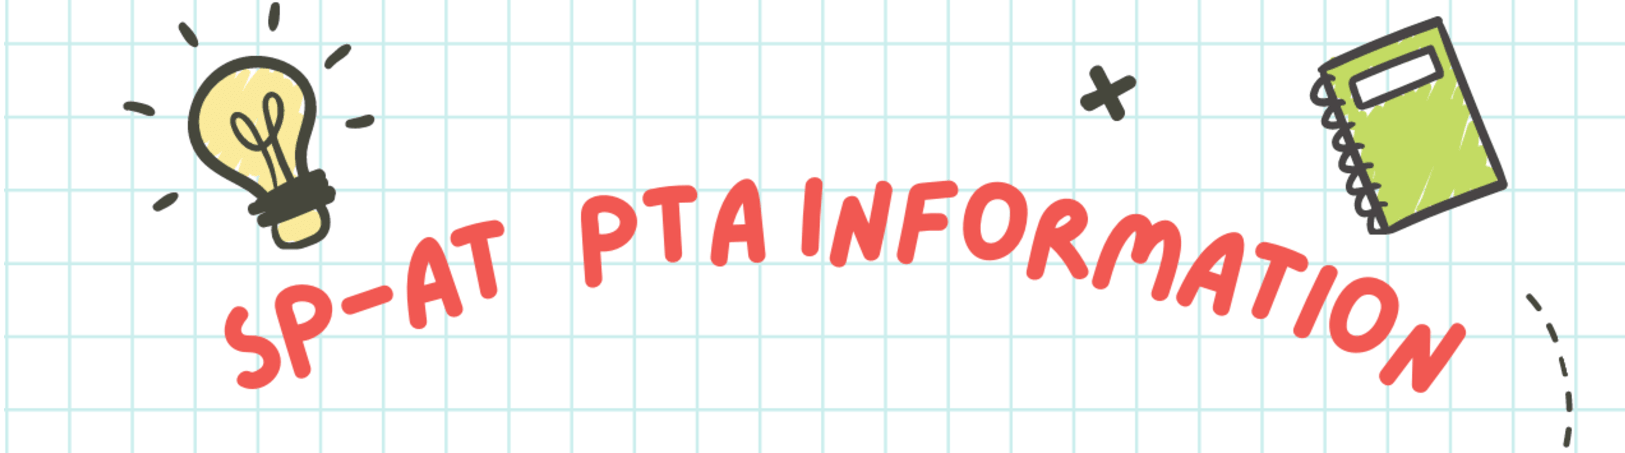 Sp-At PTA Information